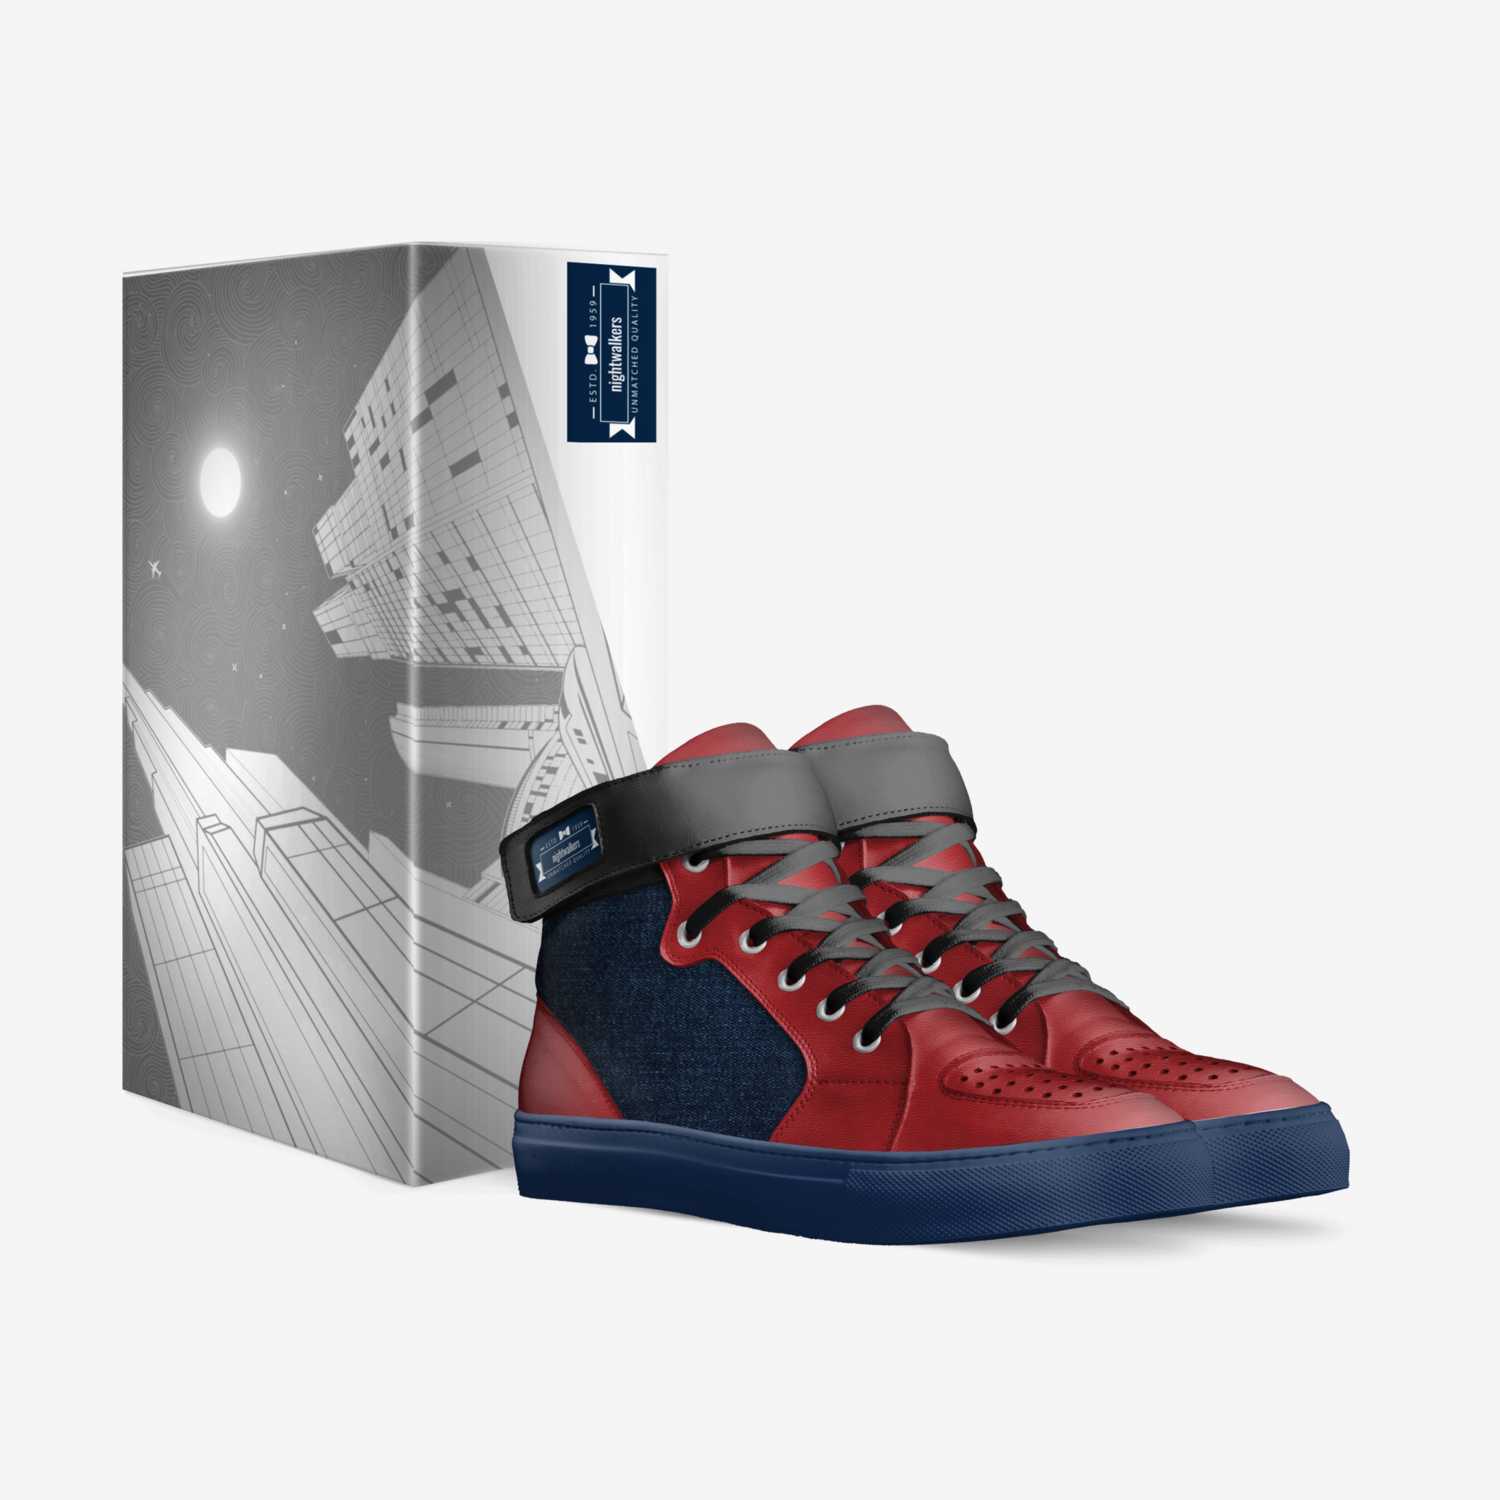 nightwalkers custom made in Italy shoes by Brody Jones | Box view